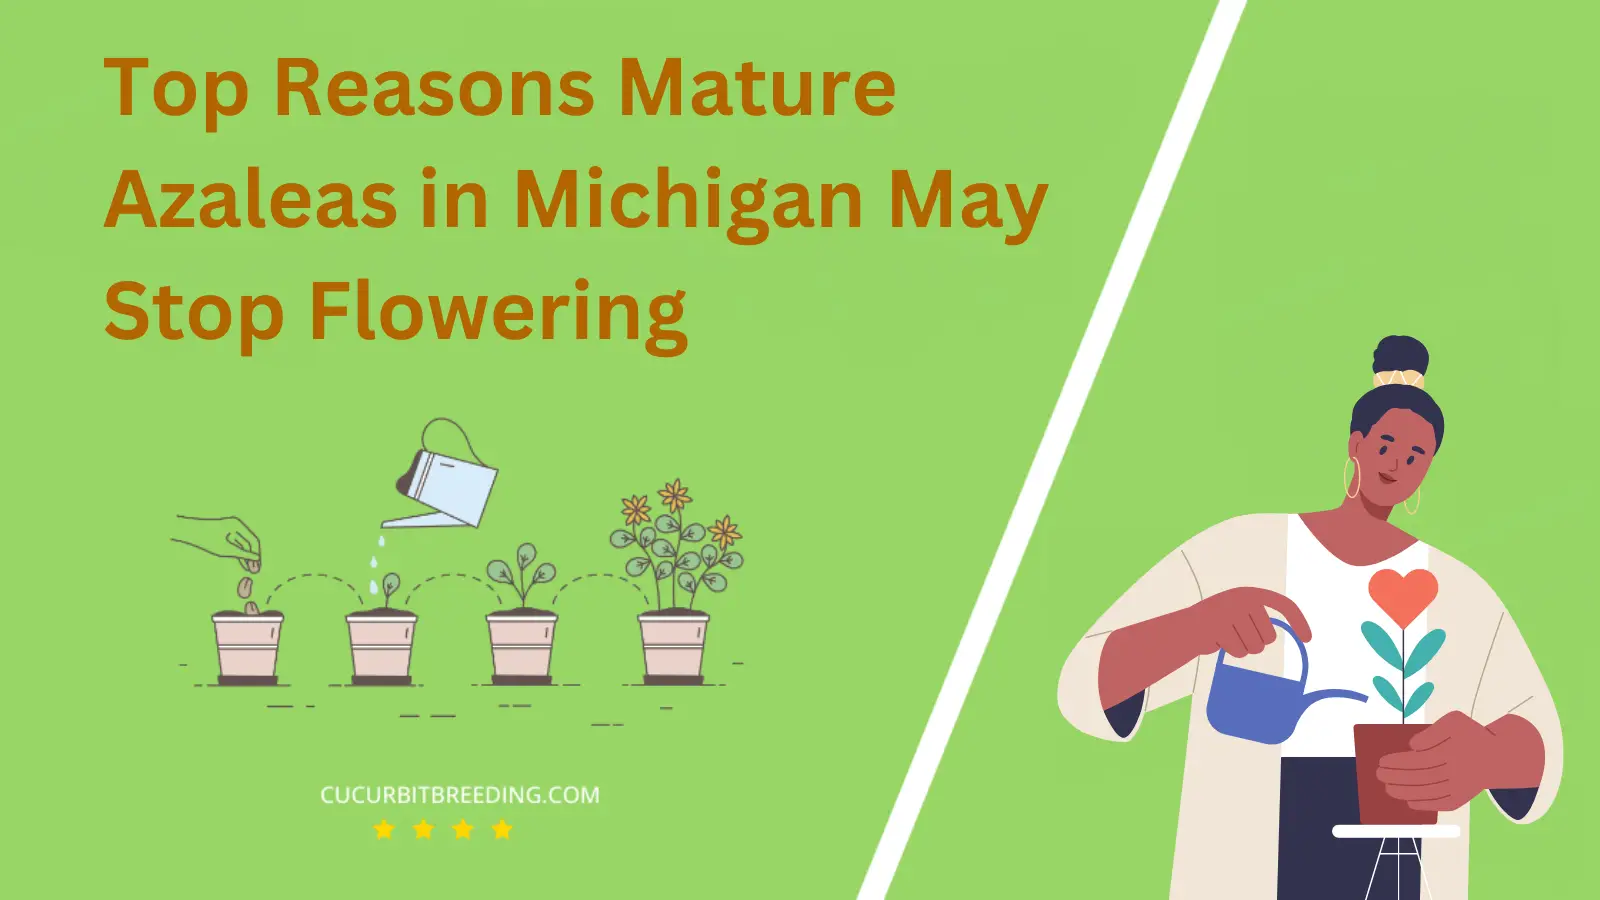 Top Reasons Mature Azaleas in Michigan May Stop Flowering